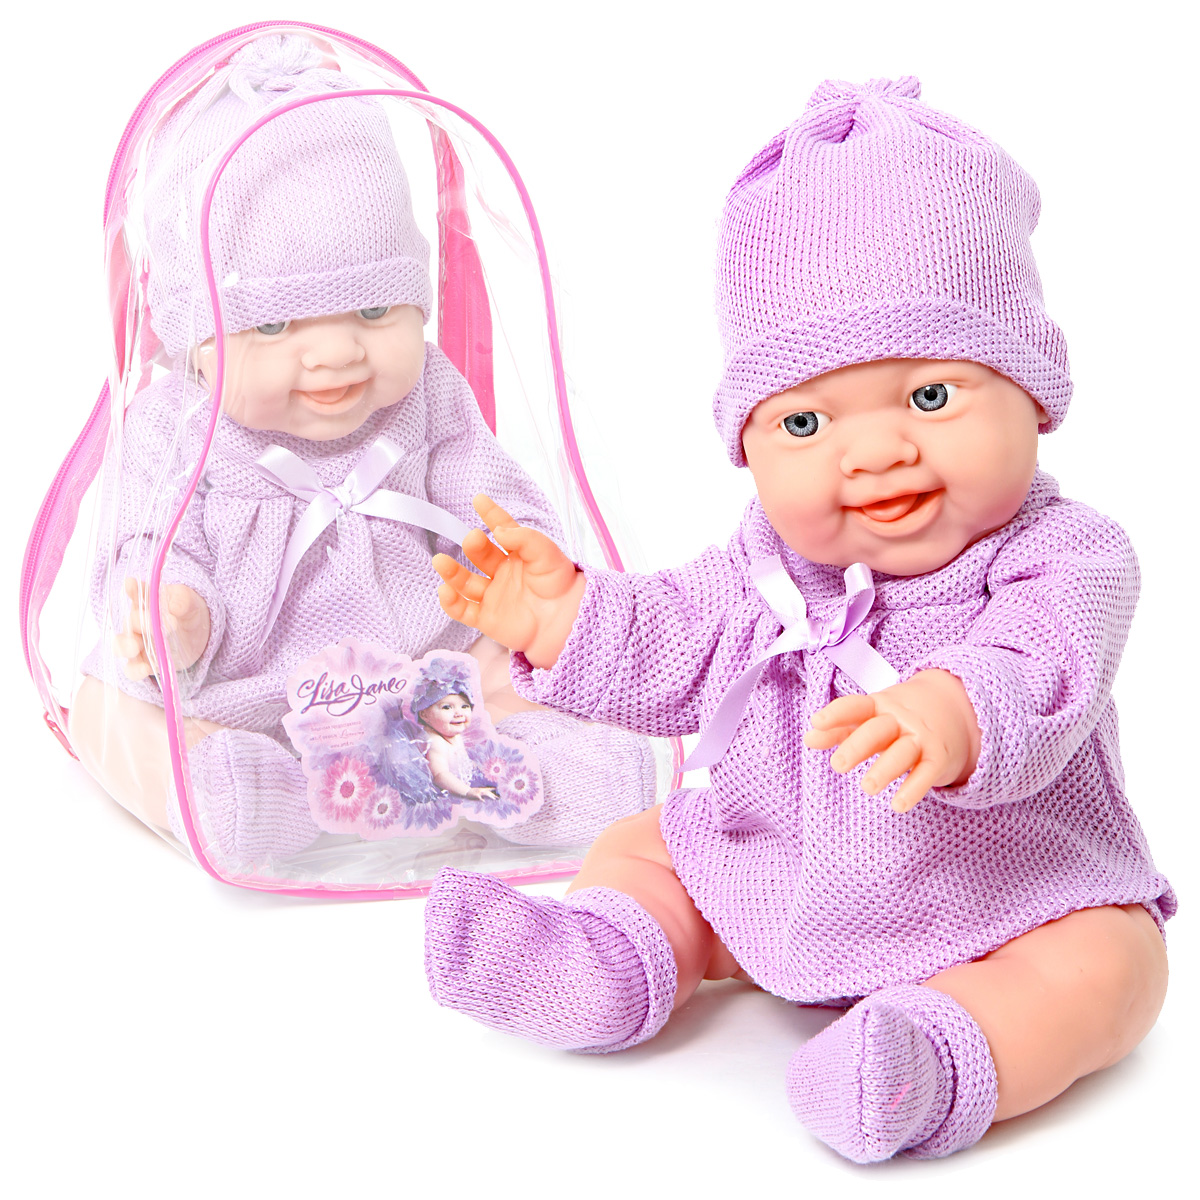 Кукла малыш. Кукла Lisa Jane Арина, 37 см, 50433. Пупс Lisa Jane, 38 см, 70492. Кукла пупс. Пупсик игрушка для девочек.